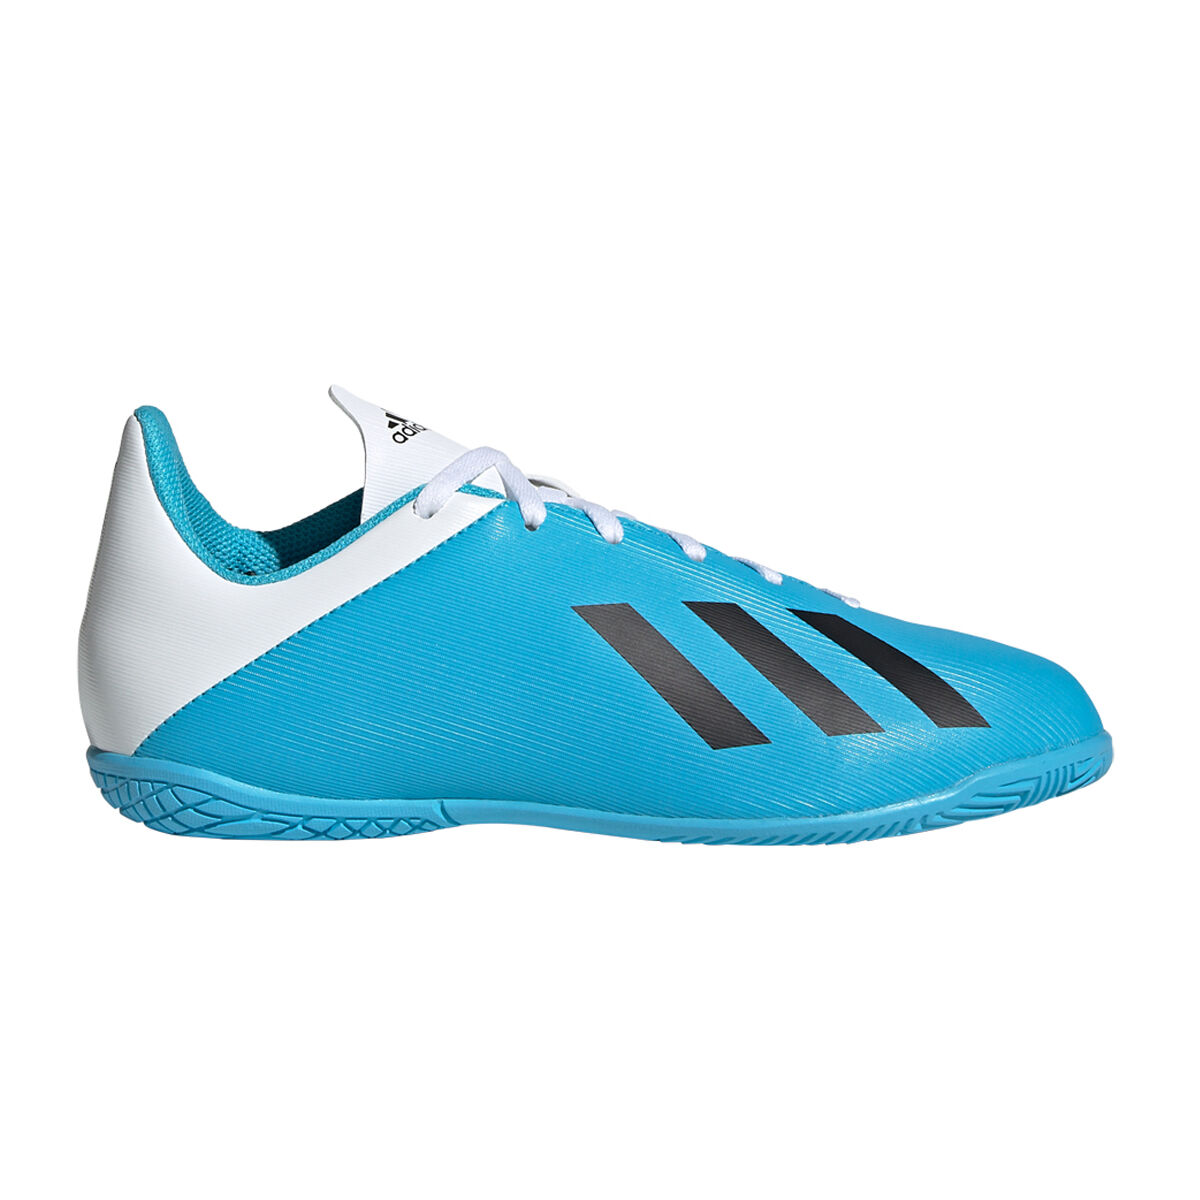 rebel sport indoor soccer shoes